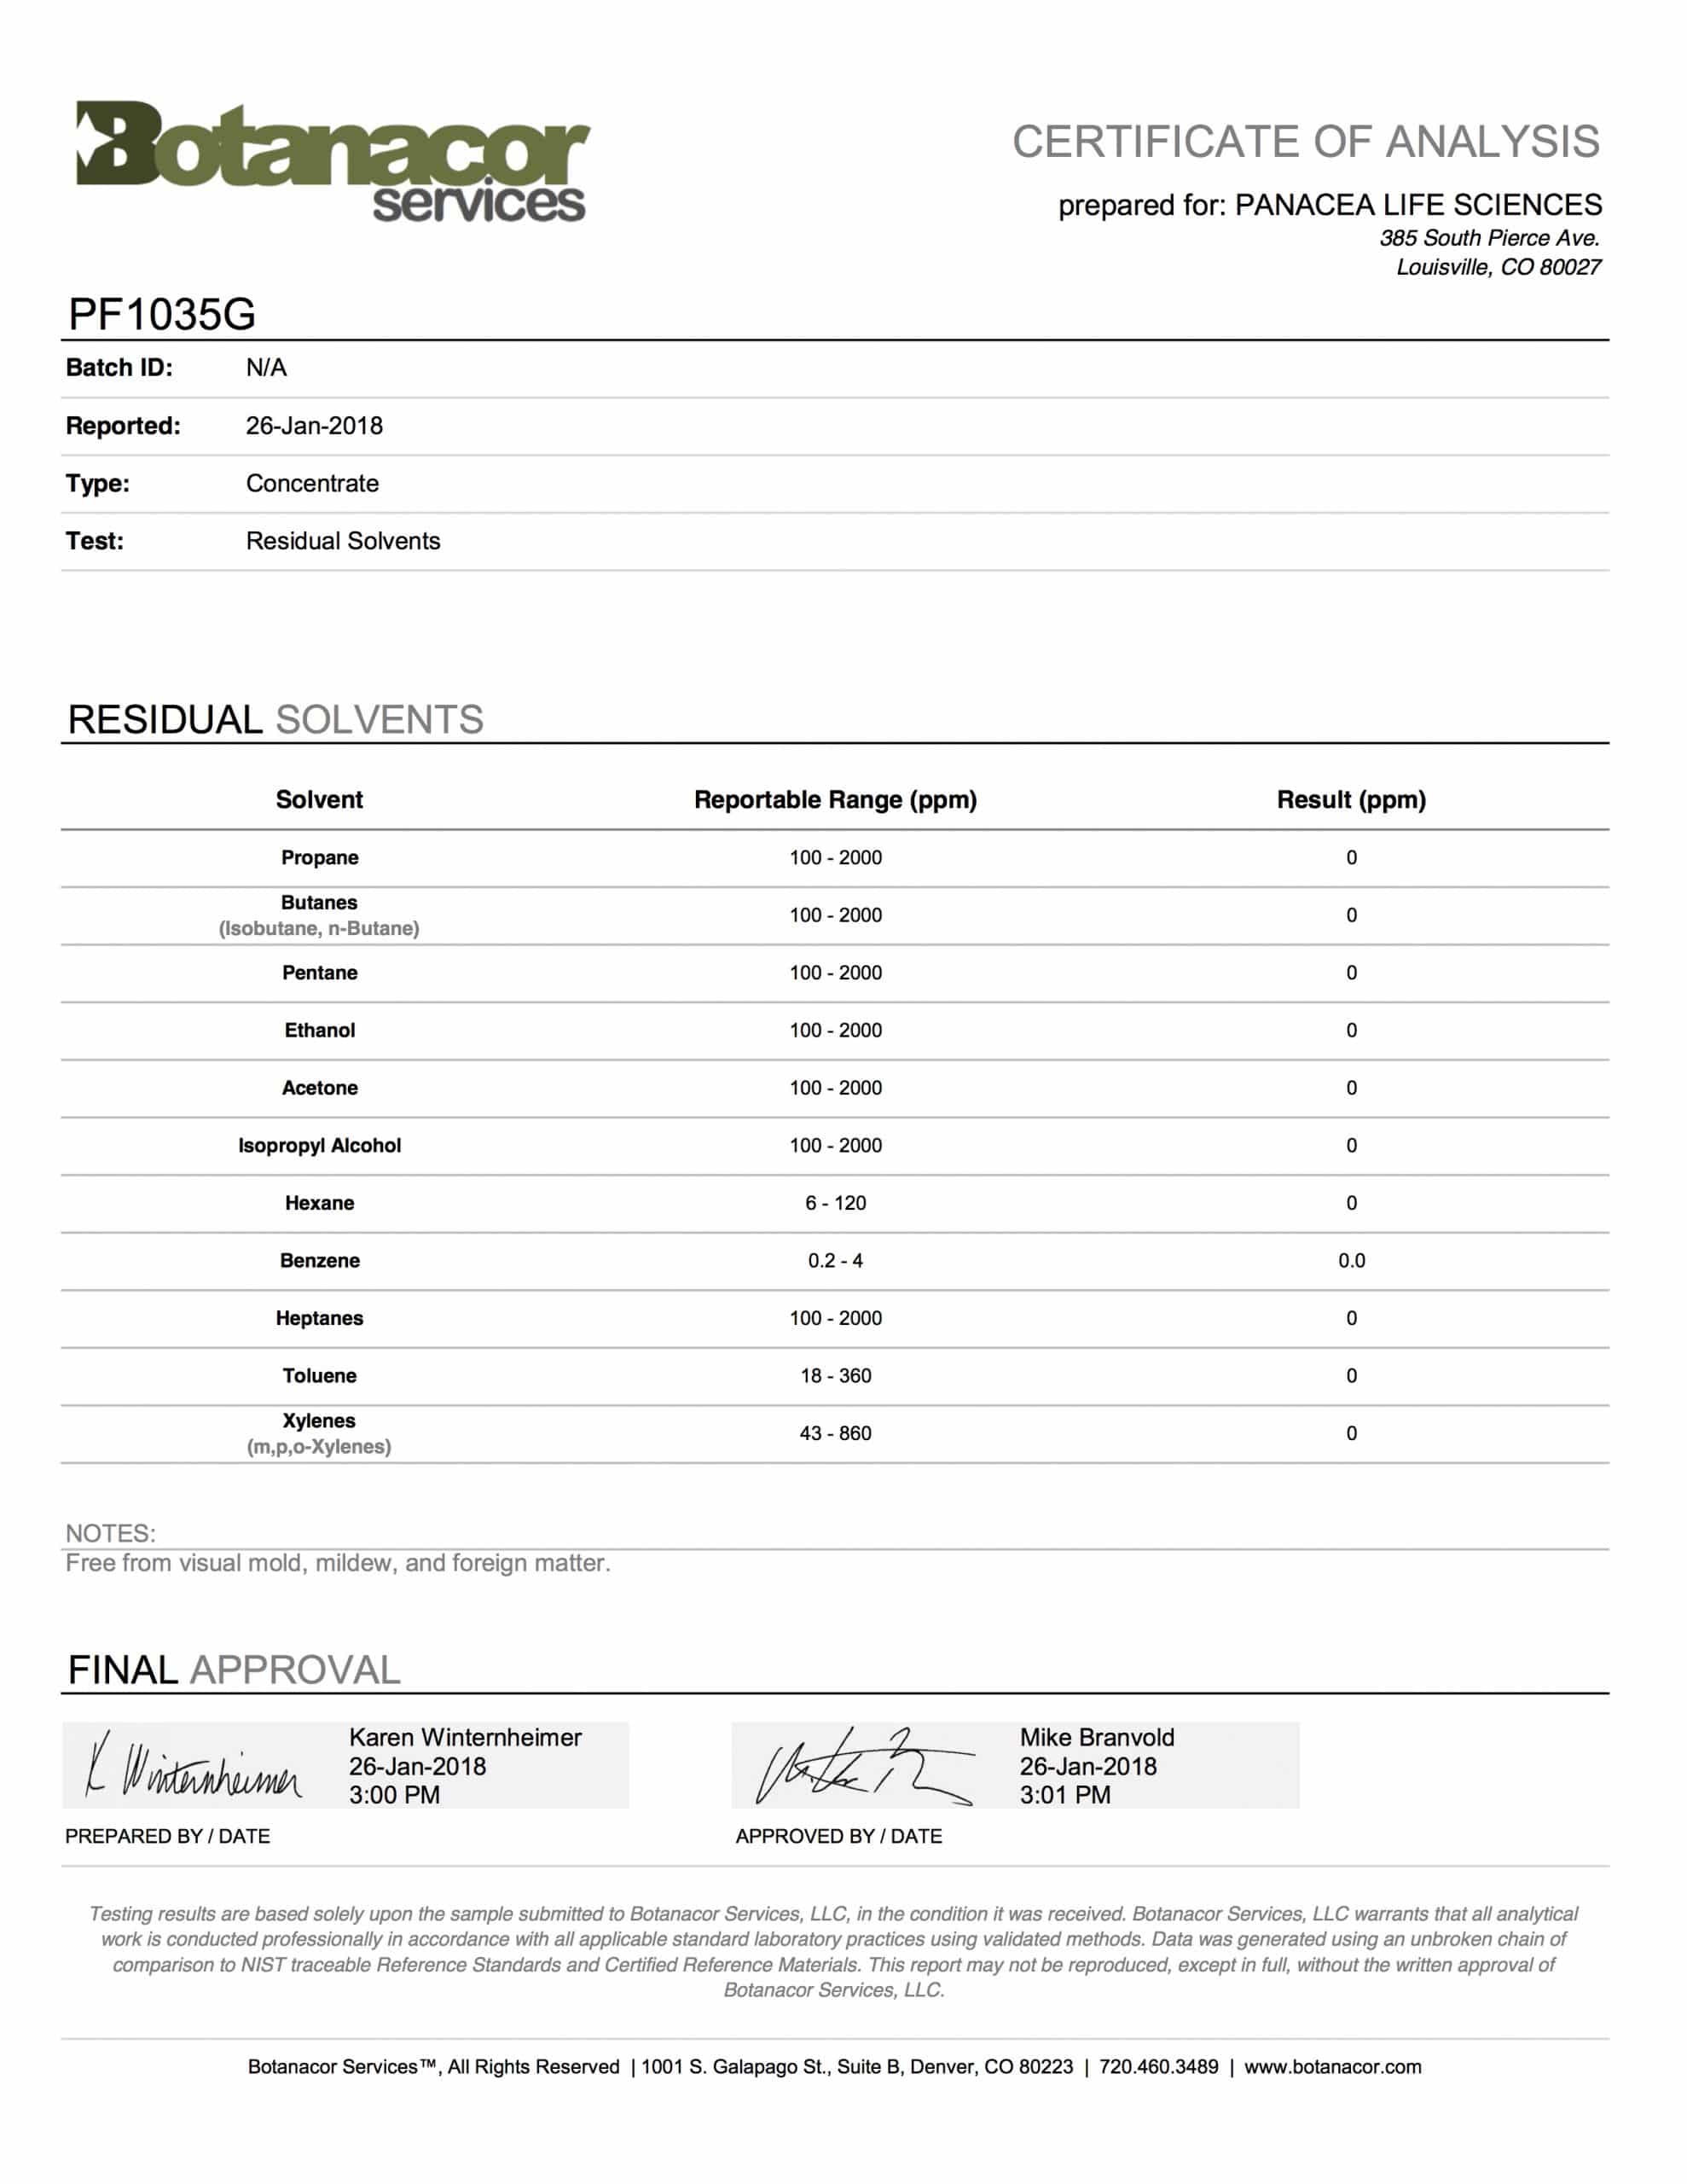 Panacea Test Results Batch PF1035G